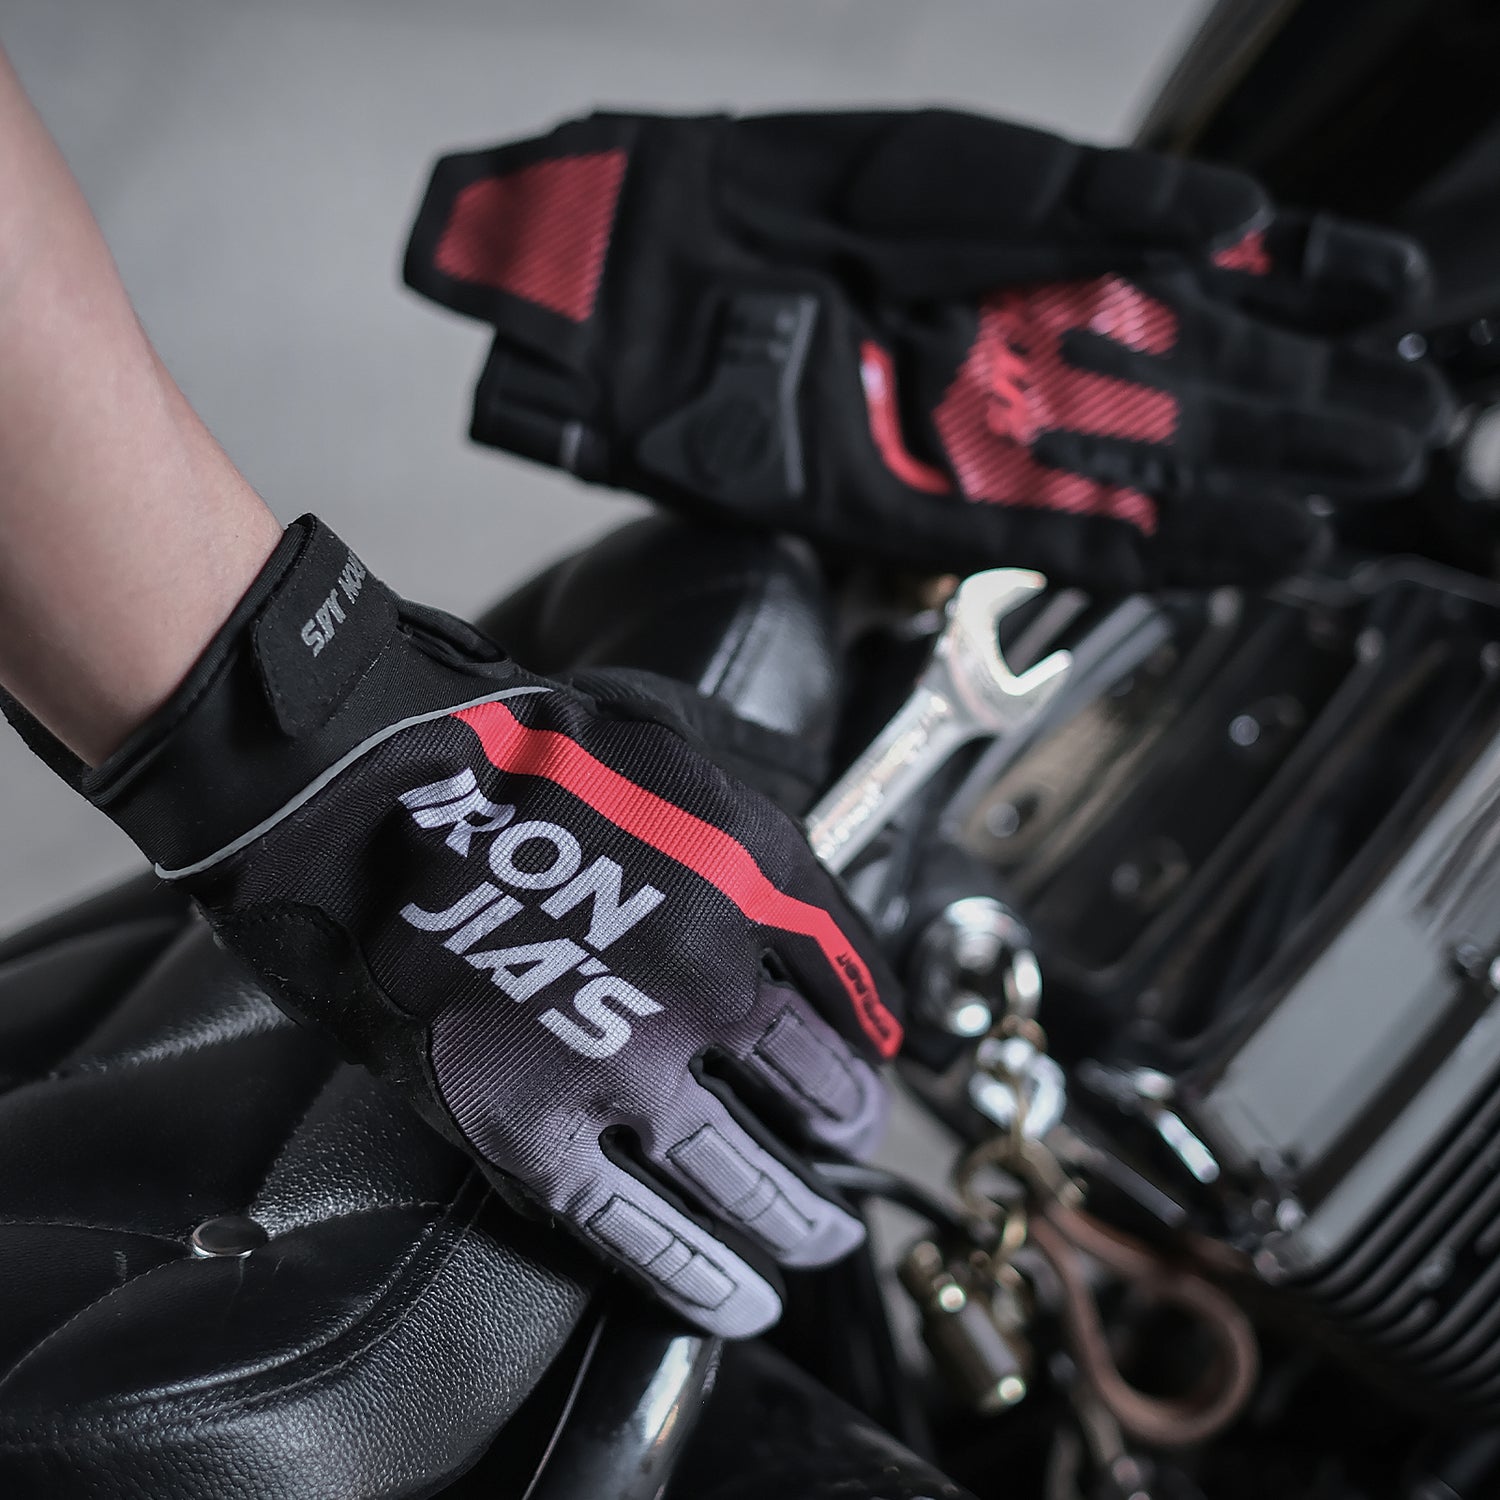 Finger Mesh Motorcycle Gloves | JIA08